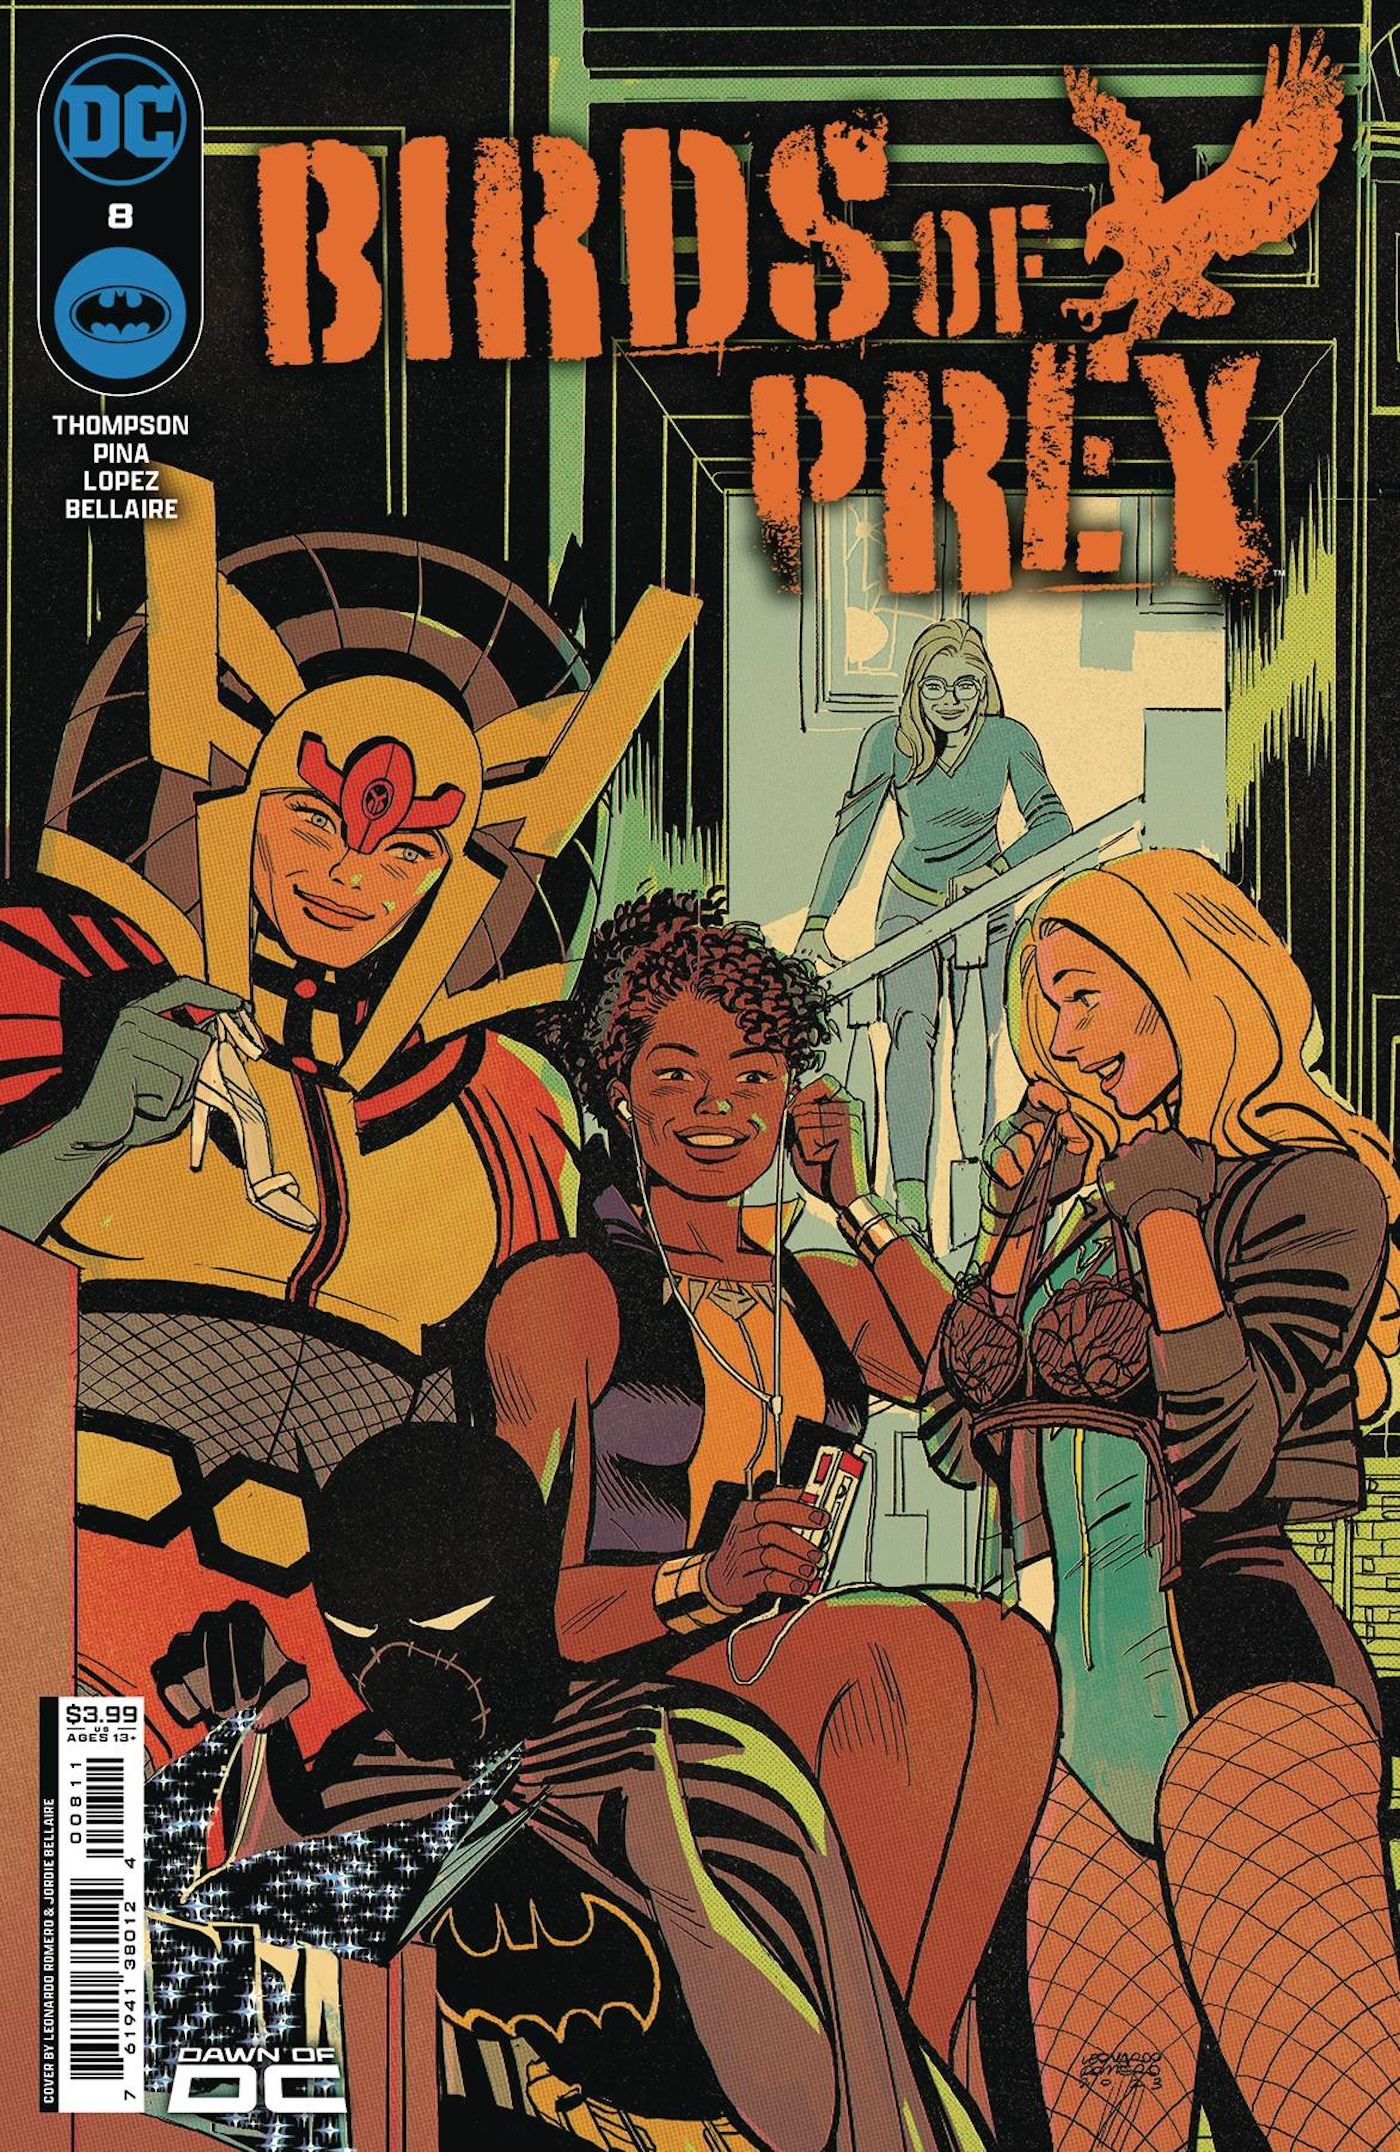 Birds of Prey 8 Main Cover: Big Barda, Vixen, Batgirl, and Black Canary look at clothes while smiling.